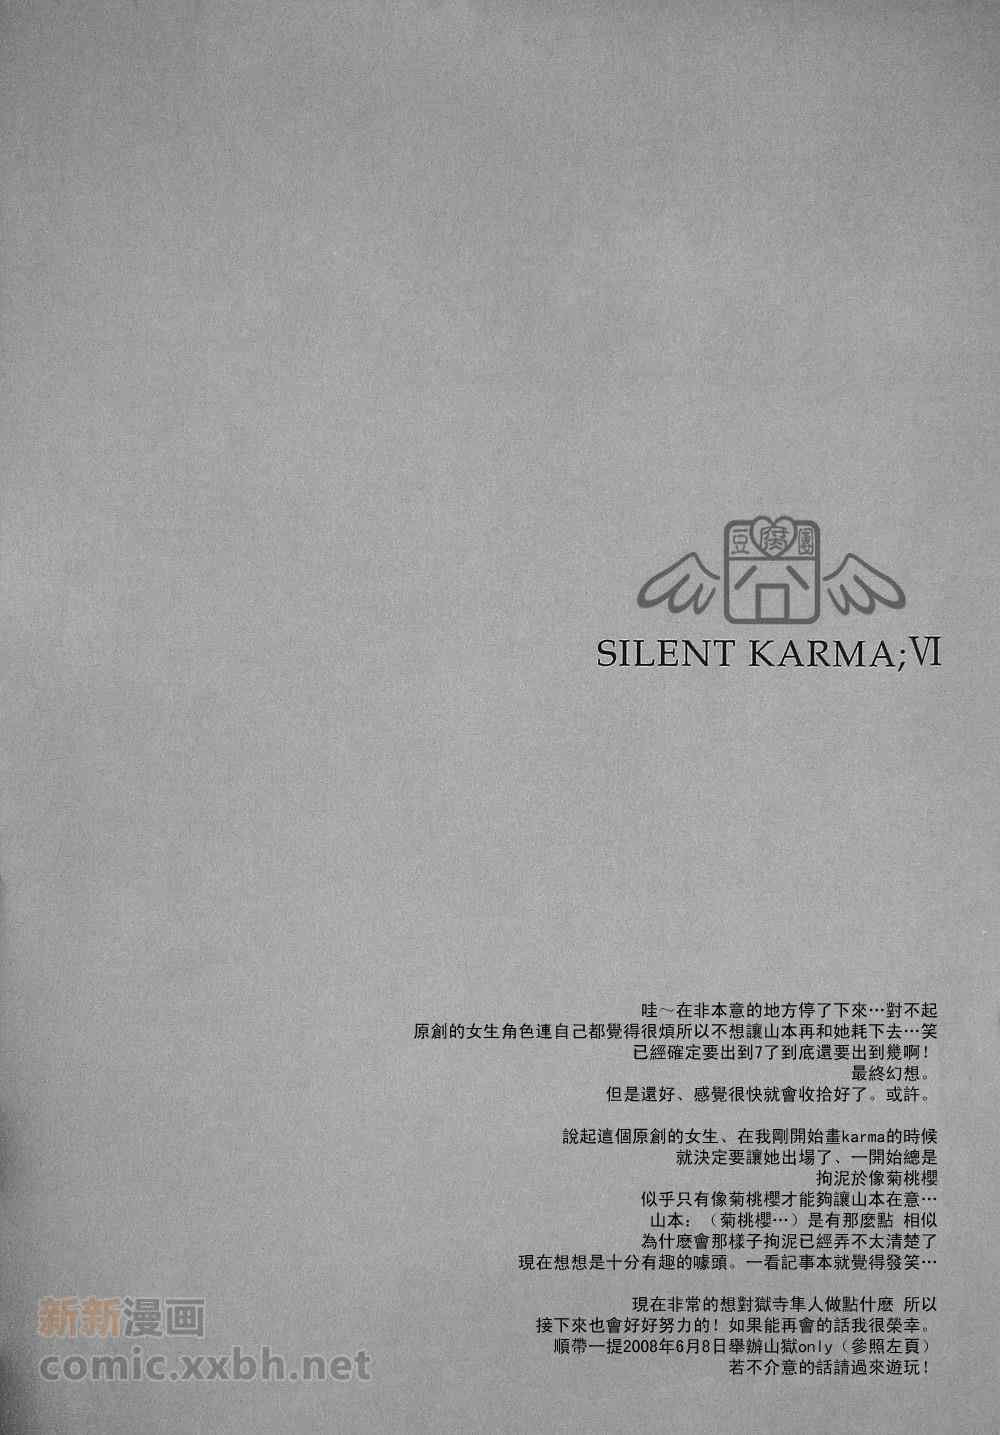 《Silent Karma Ⅰ~Ⅴ》漫画 06集